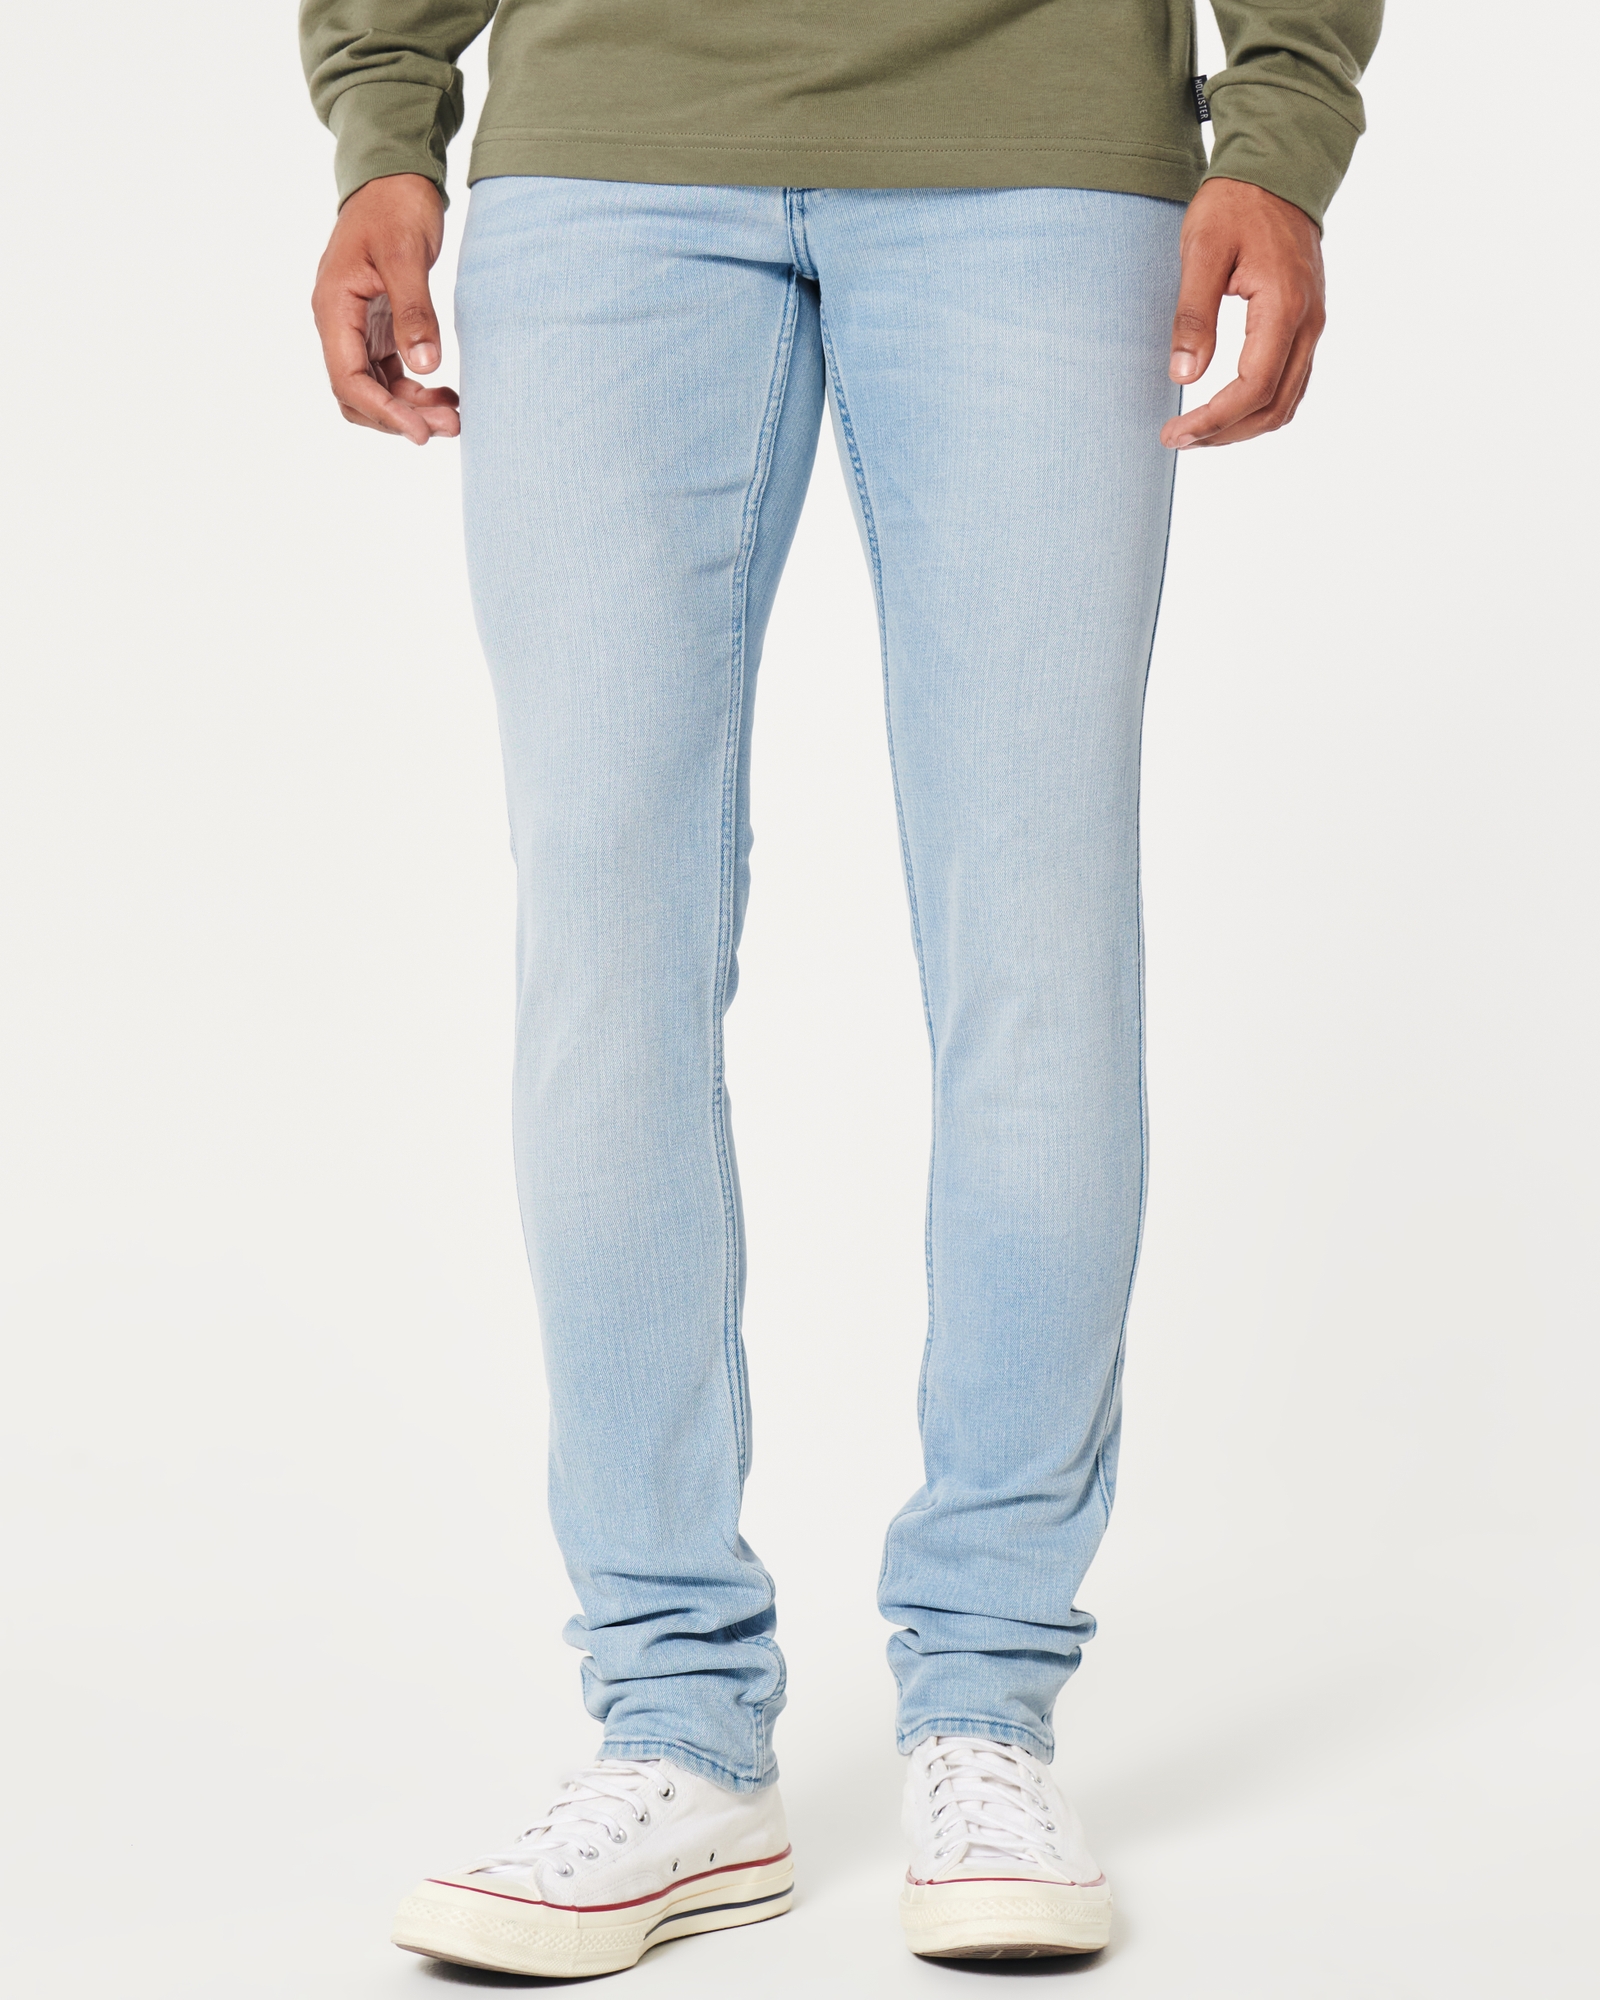 Men's Light Wash Stacked Jeans | Men's | HollisterCo.com